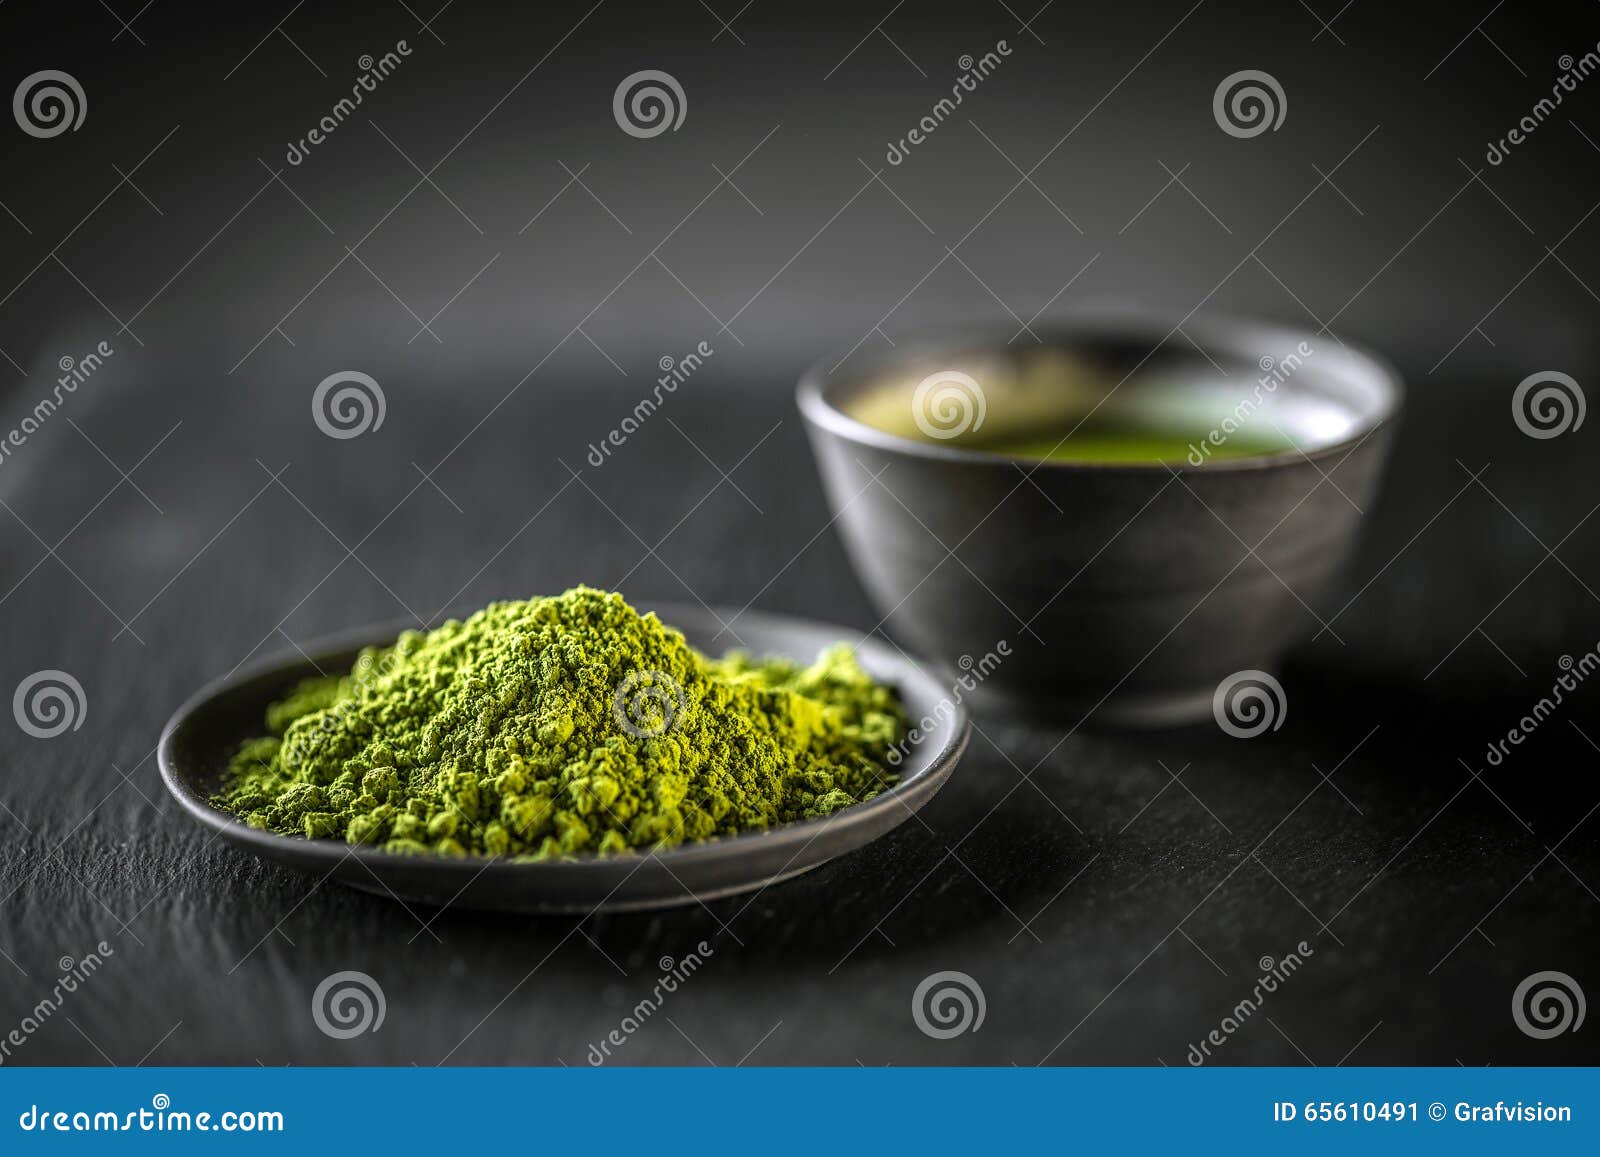 matcha, powder green tea